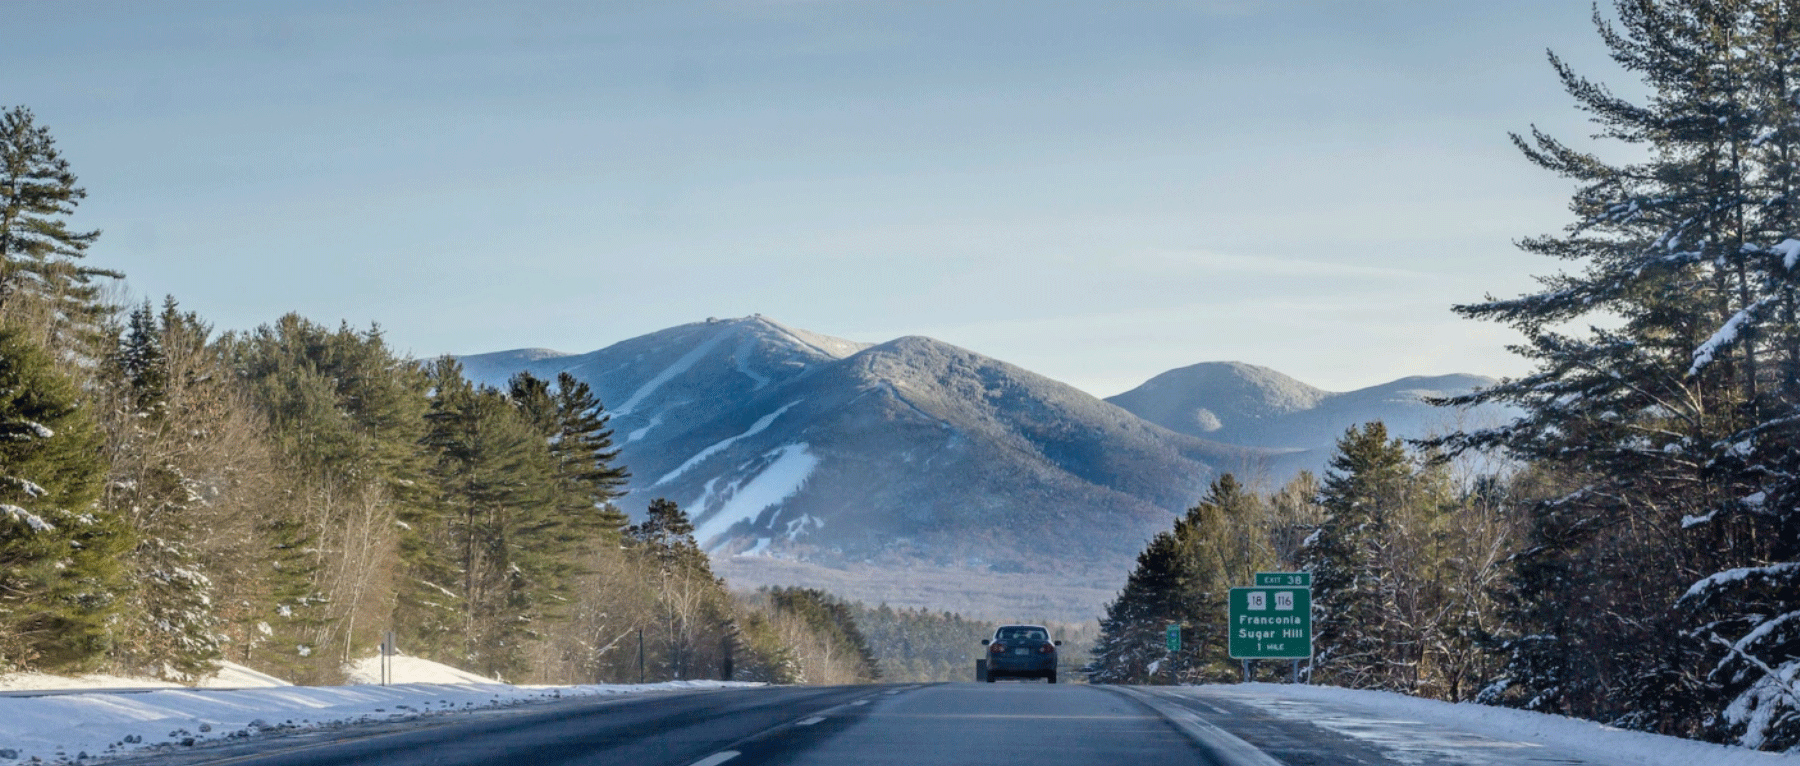 Snowy Highway near Franconia, NH - Photo Credit Stanton House Inn